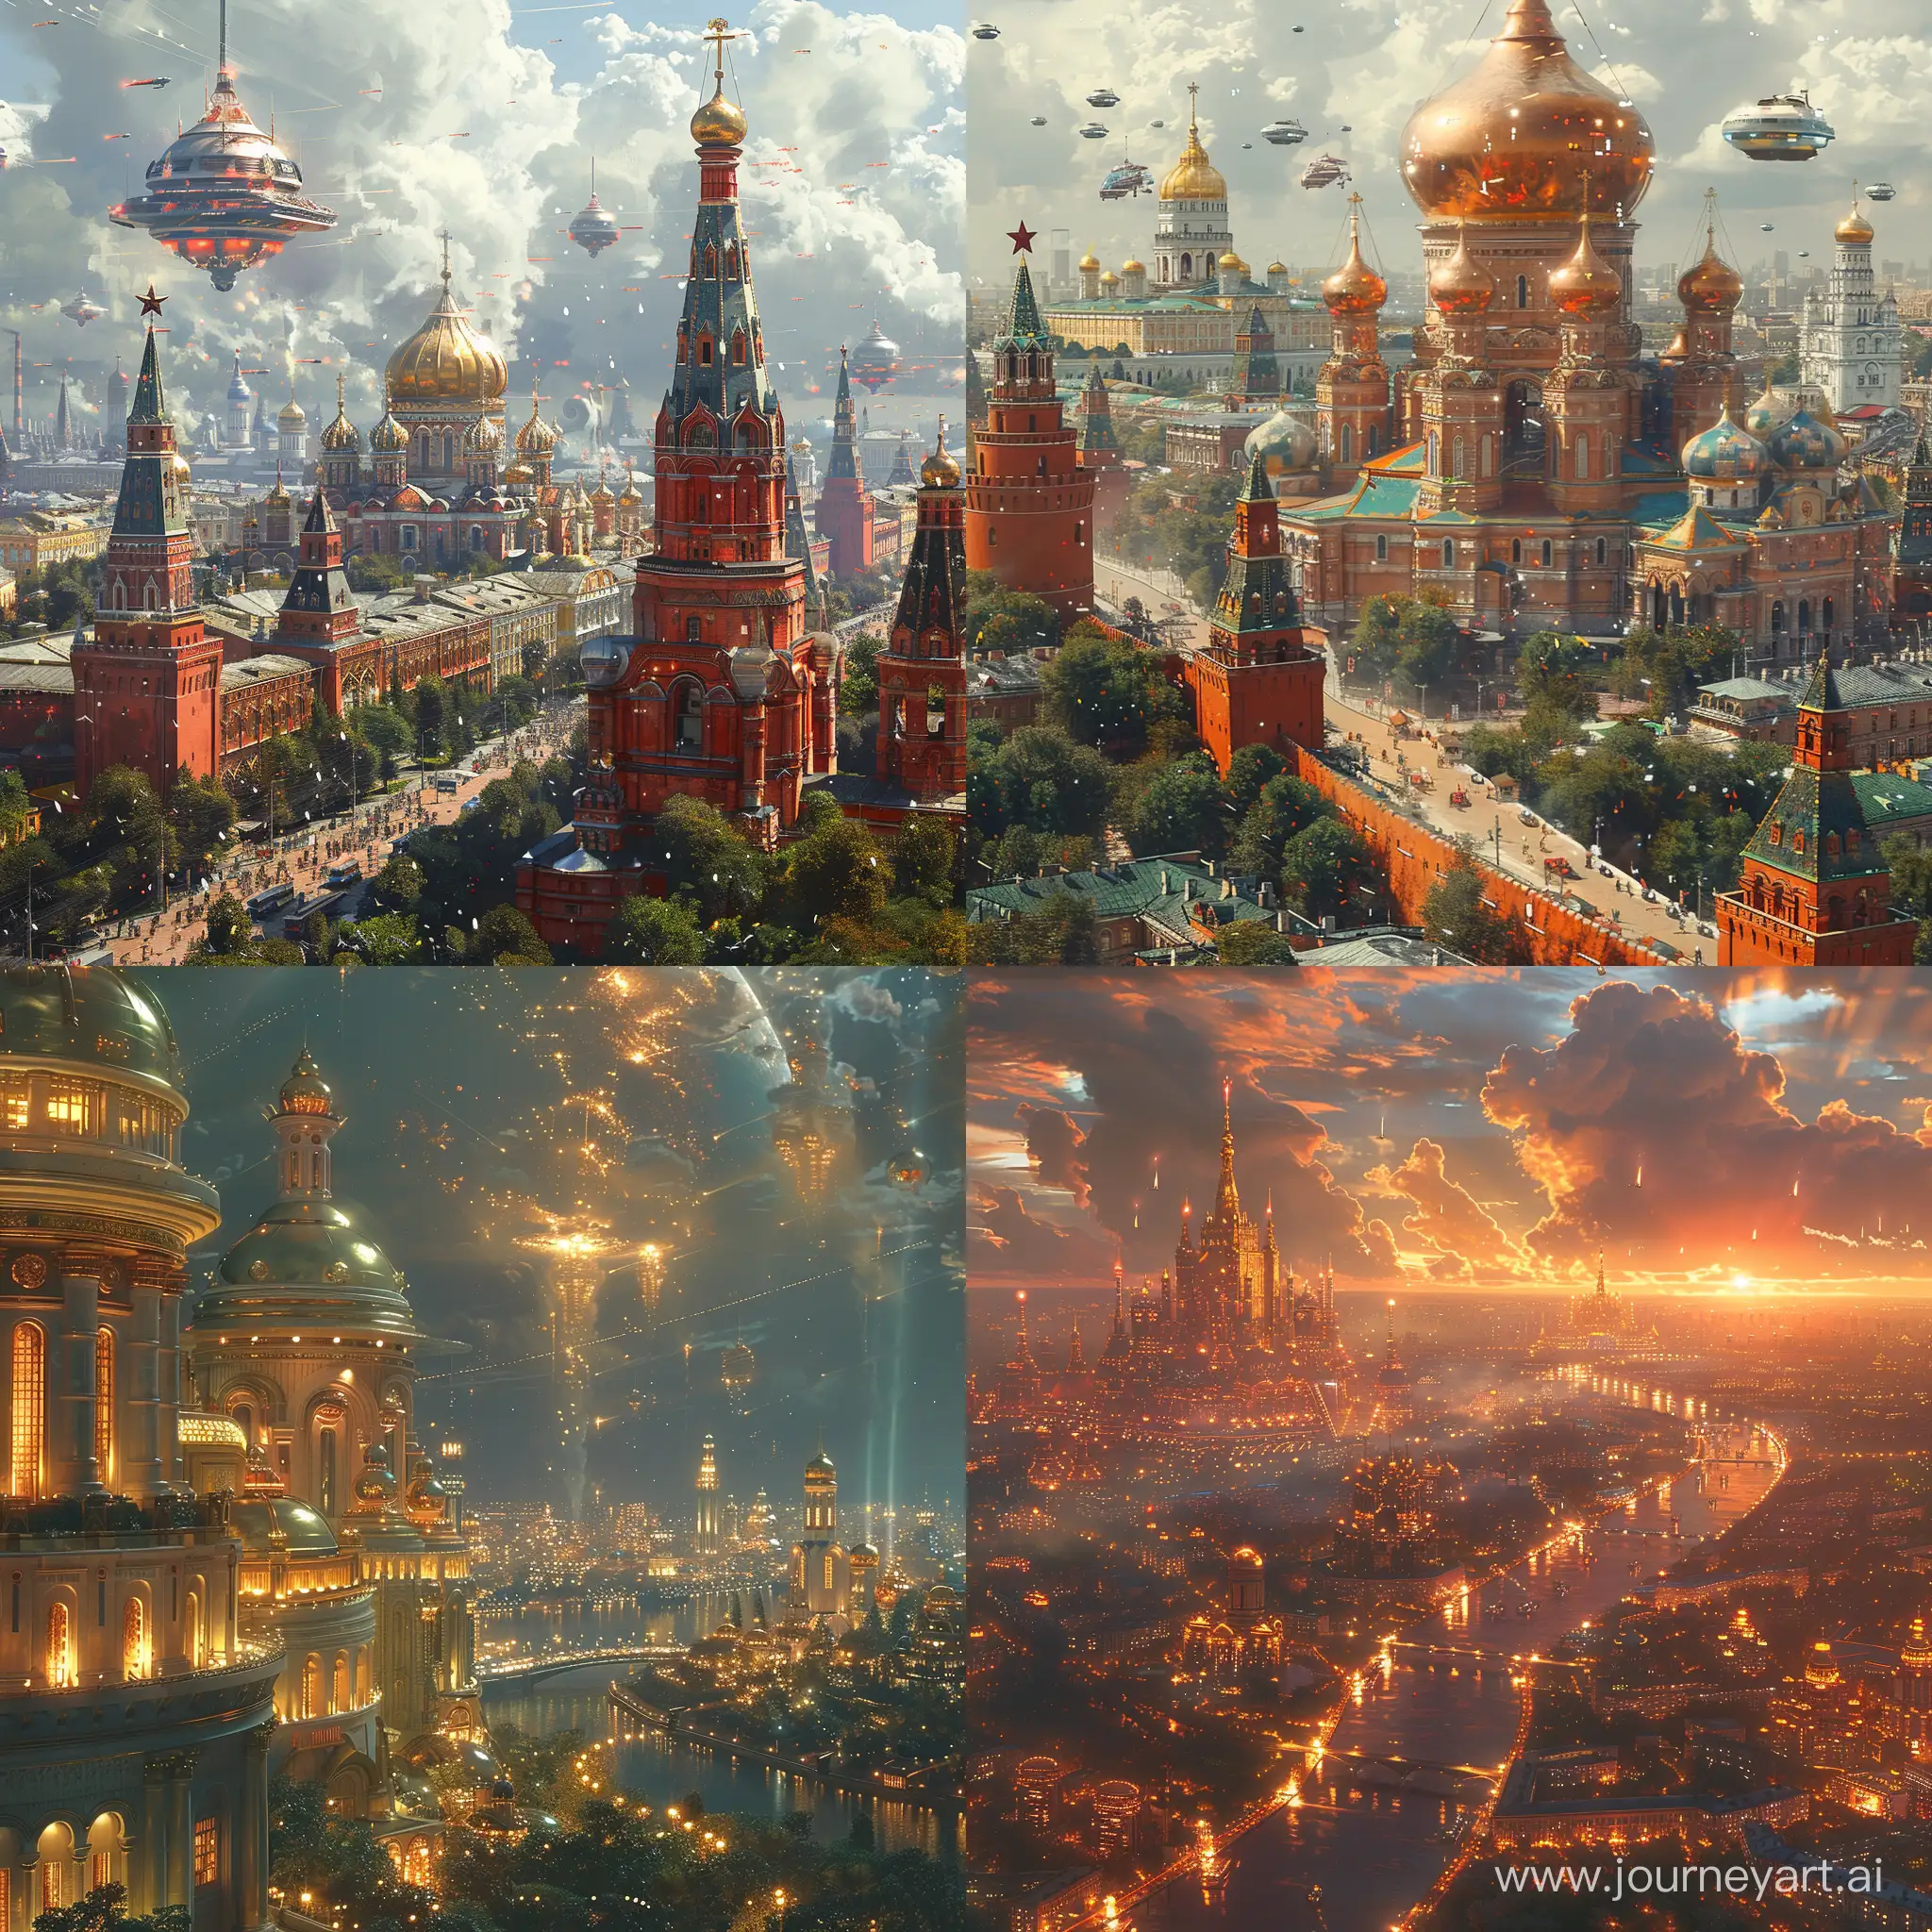 Futuristic sci-fi high-tech Moscow, utopian postcyberpunk --stylize 1000